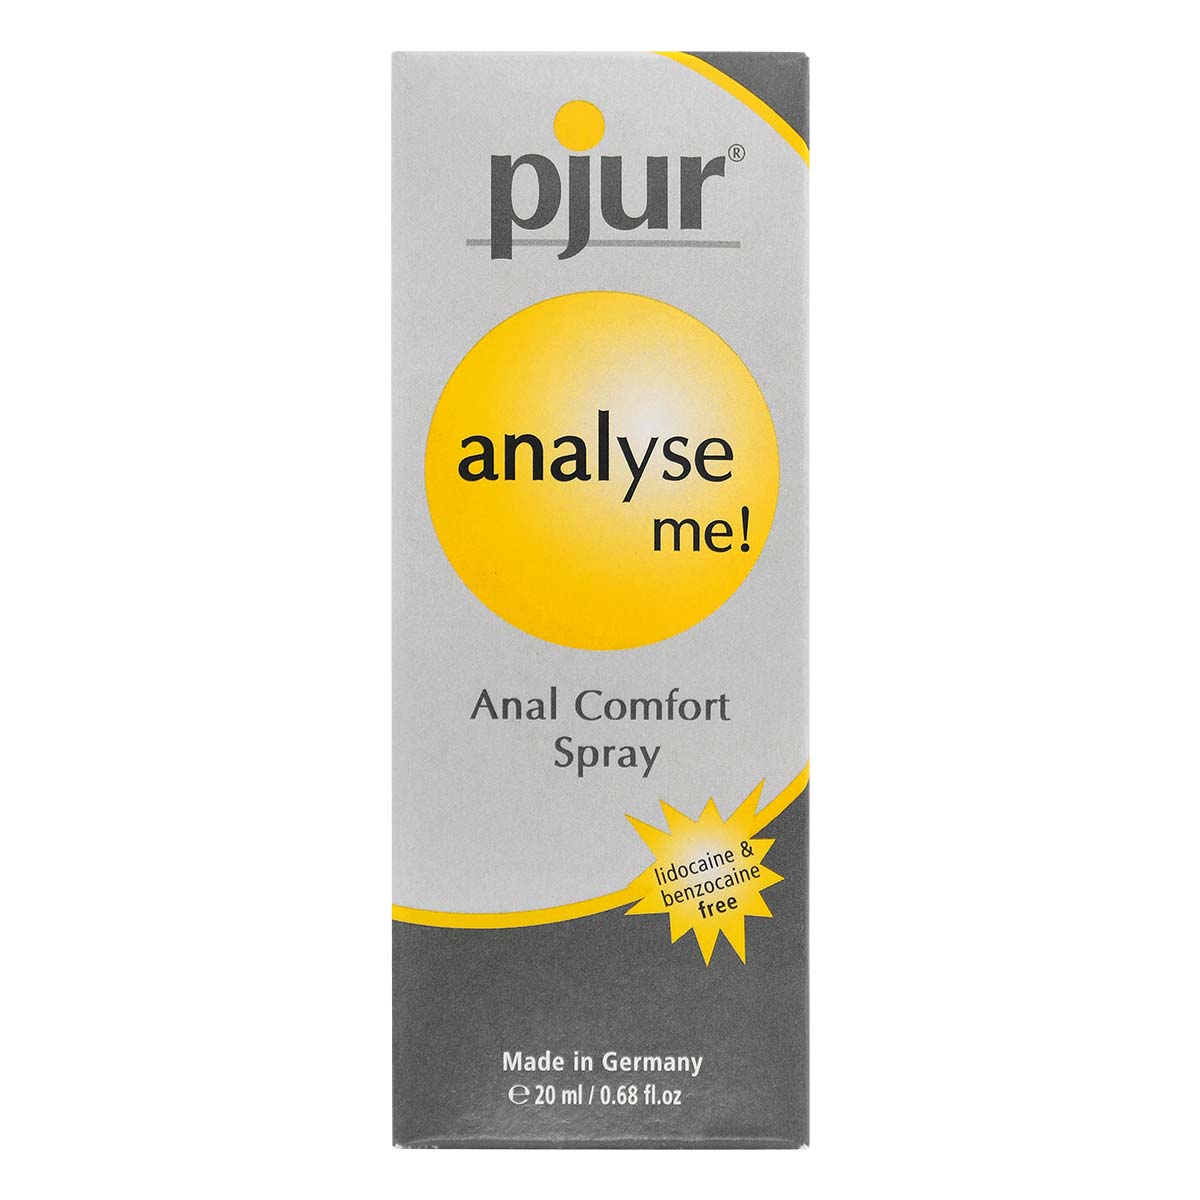 pjur analyse me! Anal Comfort Spray 20ml-p_2